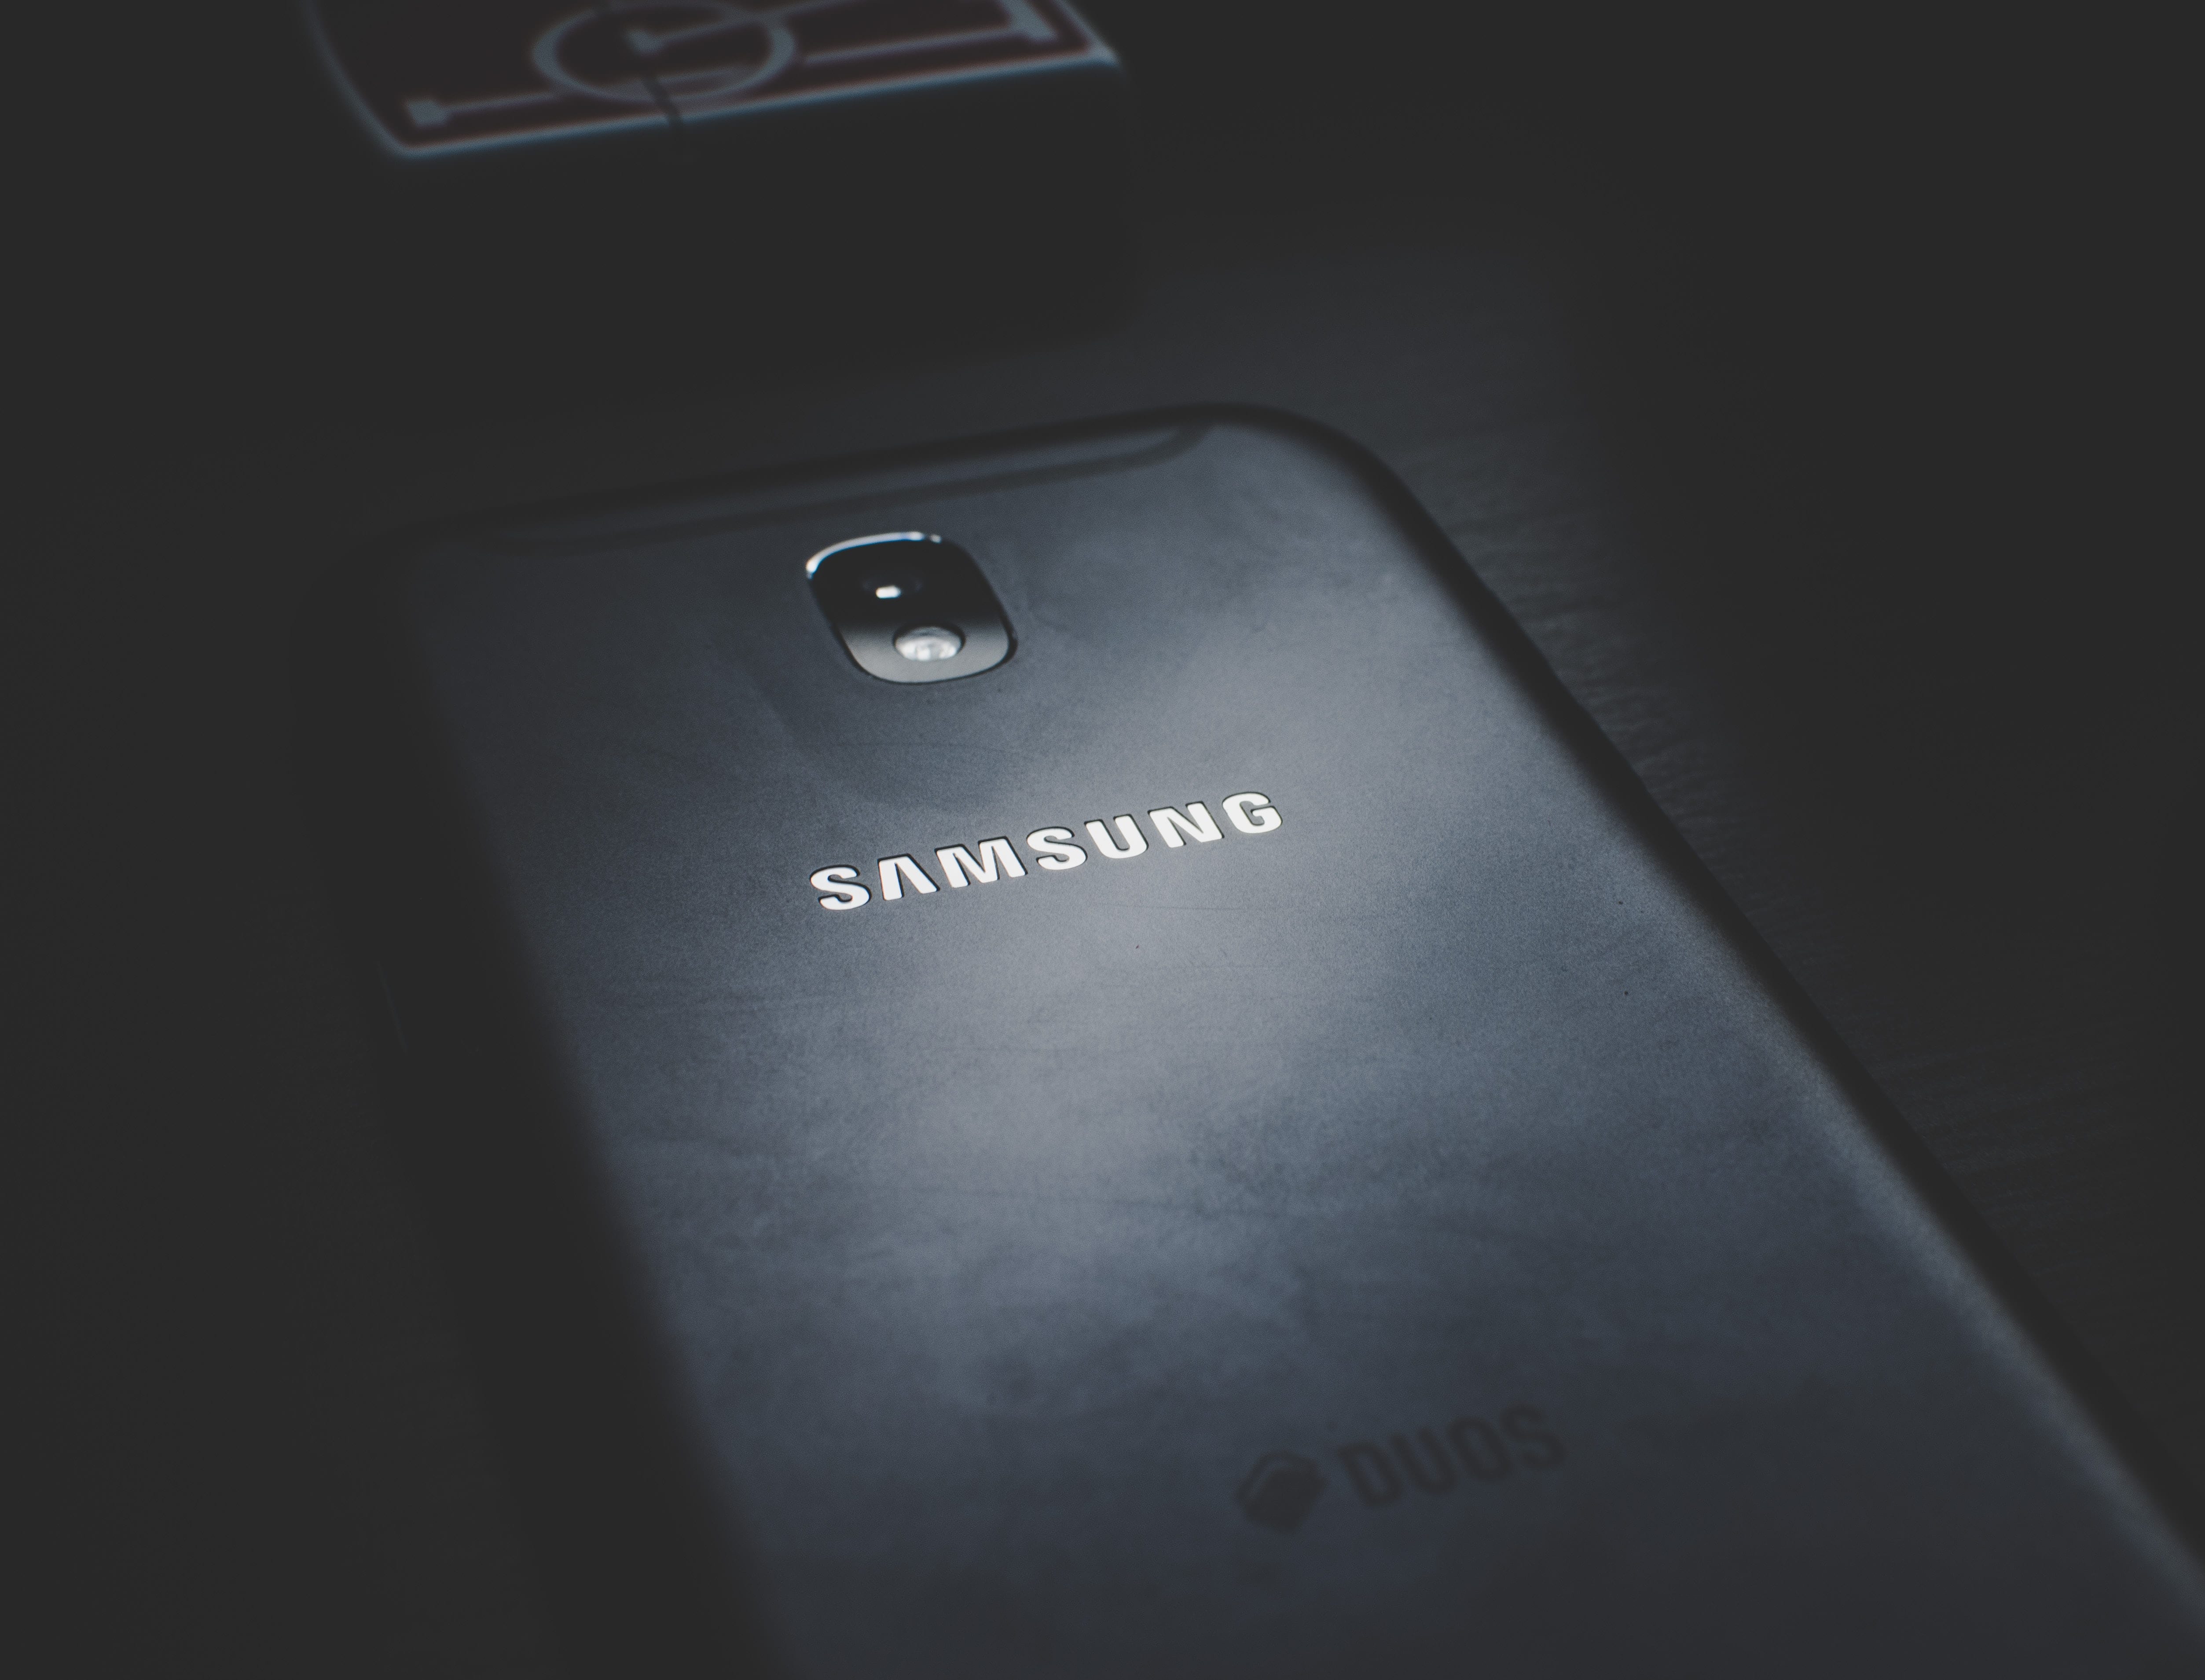 Samsung One UI 2: Yuk, Simak Fitur-fitur Terbarunya! - Filemagz